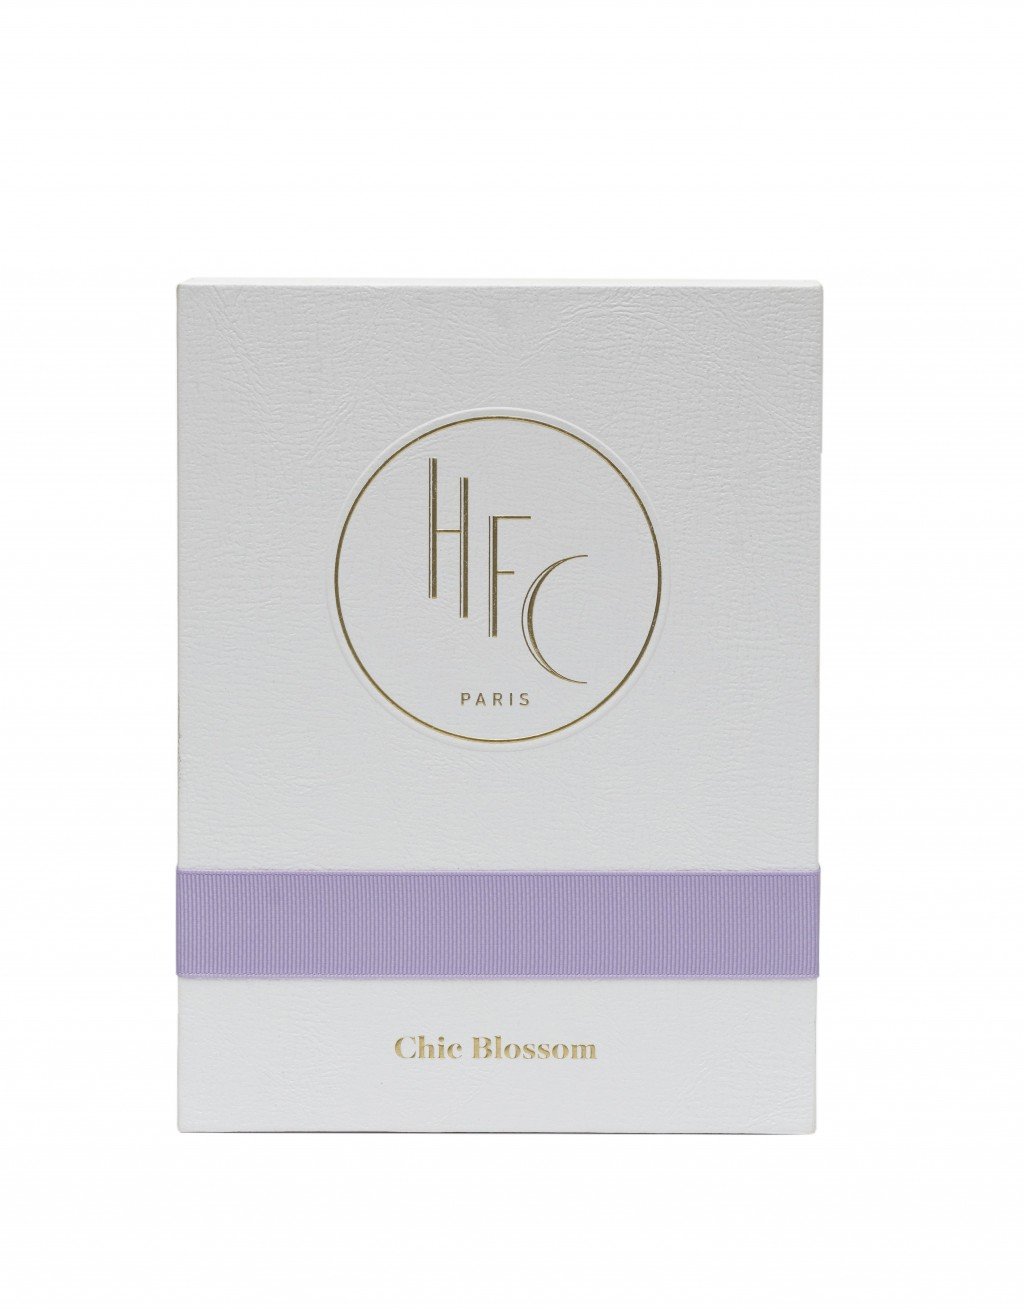 Chic blossom. Haute Fragrance Company Chic Blossom 75 мл. HFC Парфюм Chic Blossom. Chic Blossom Haute Fragrance Company HFC. Haute Fragrance Company Chic Blossom 7.5.